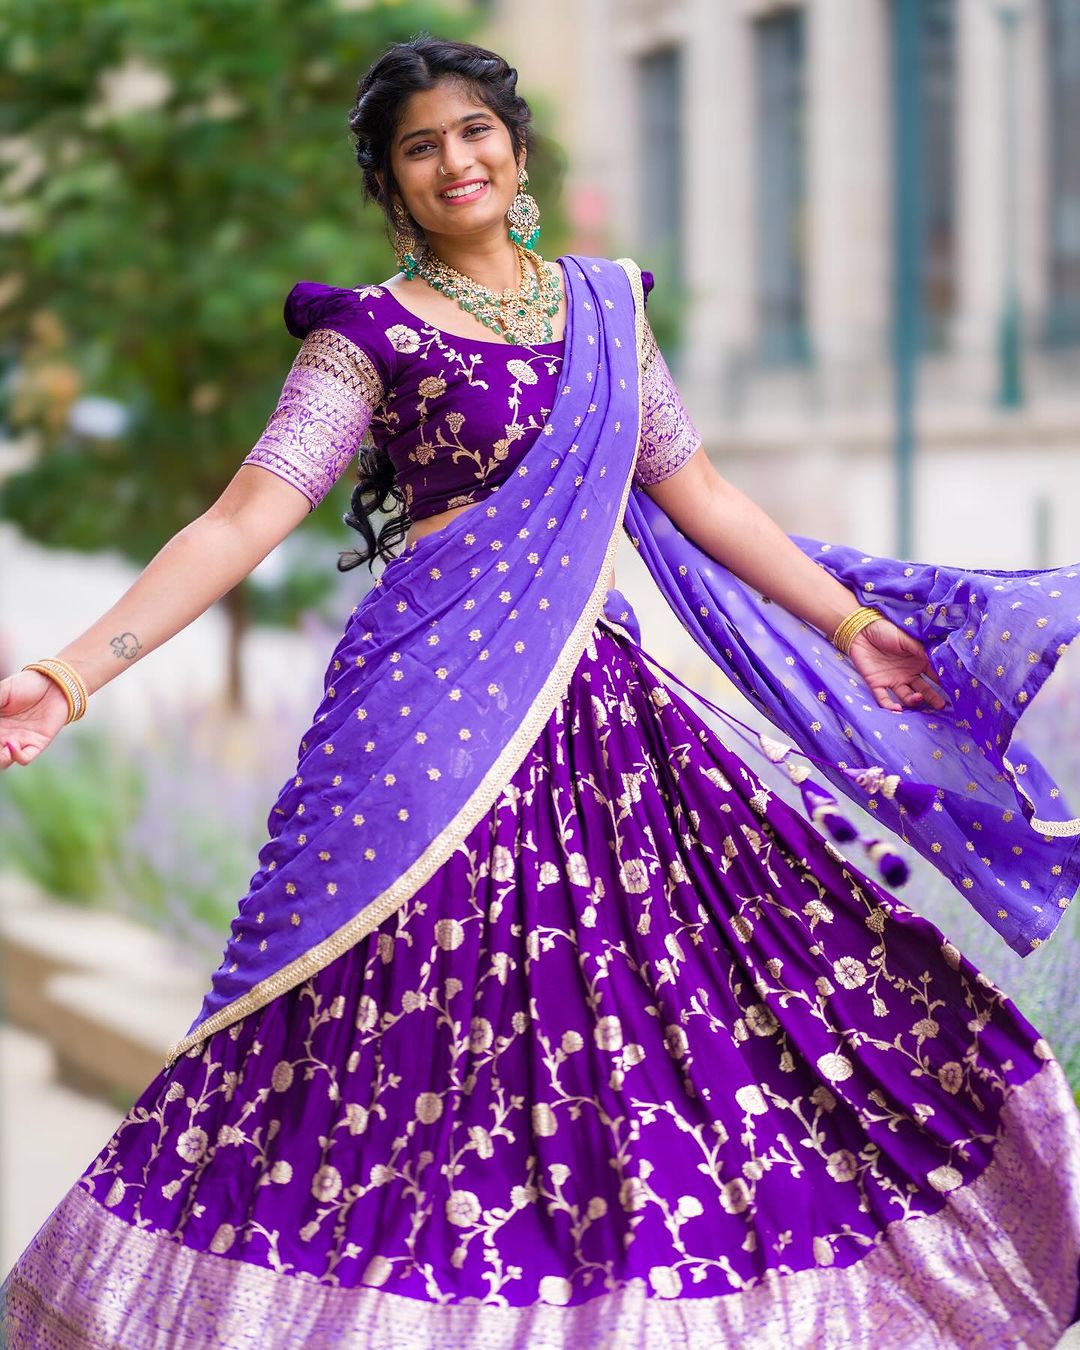 Portrait of beautiful Indian girl. Young hindu woman in traditional Indian  costume lehenga choli or sari or saree photo – Dress Image on Unsplash